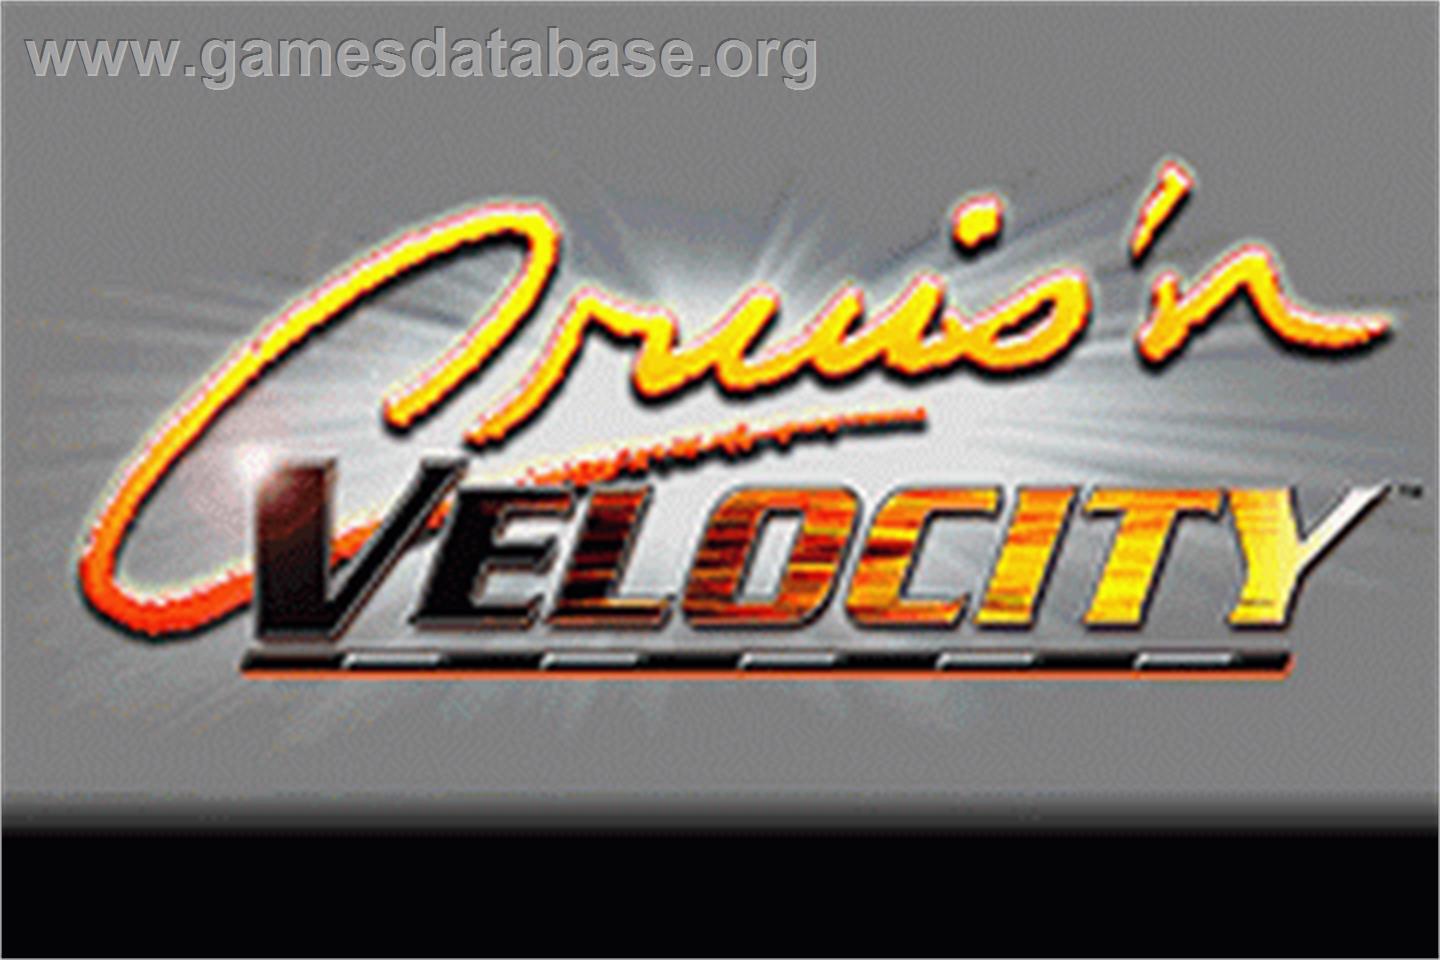 Cruis'n Velocity - Nintendo Game Boy Advance - Artwork - Title Screen